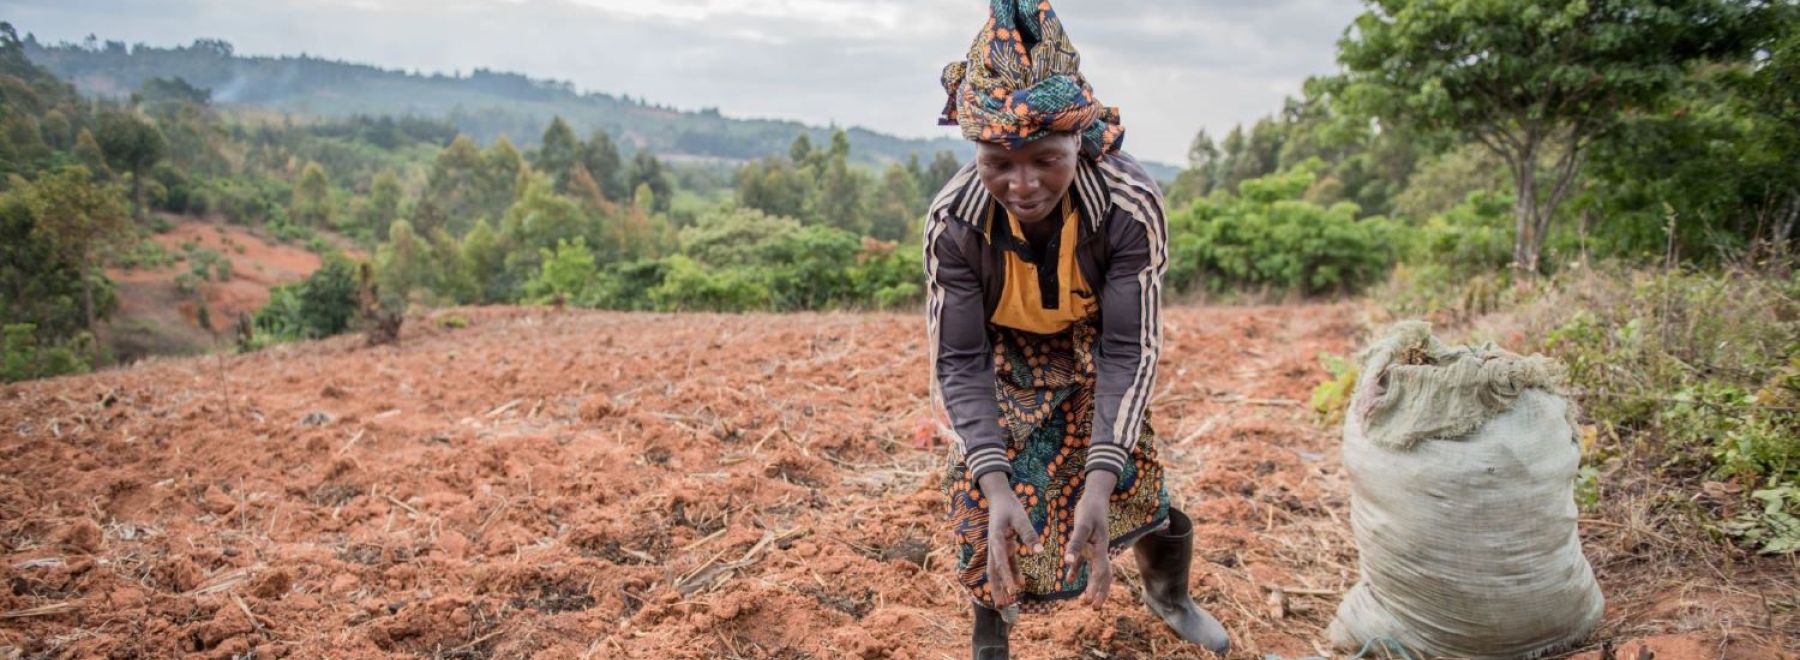 A woman smallholder farmer tends to her field 